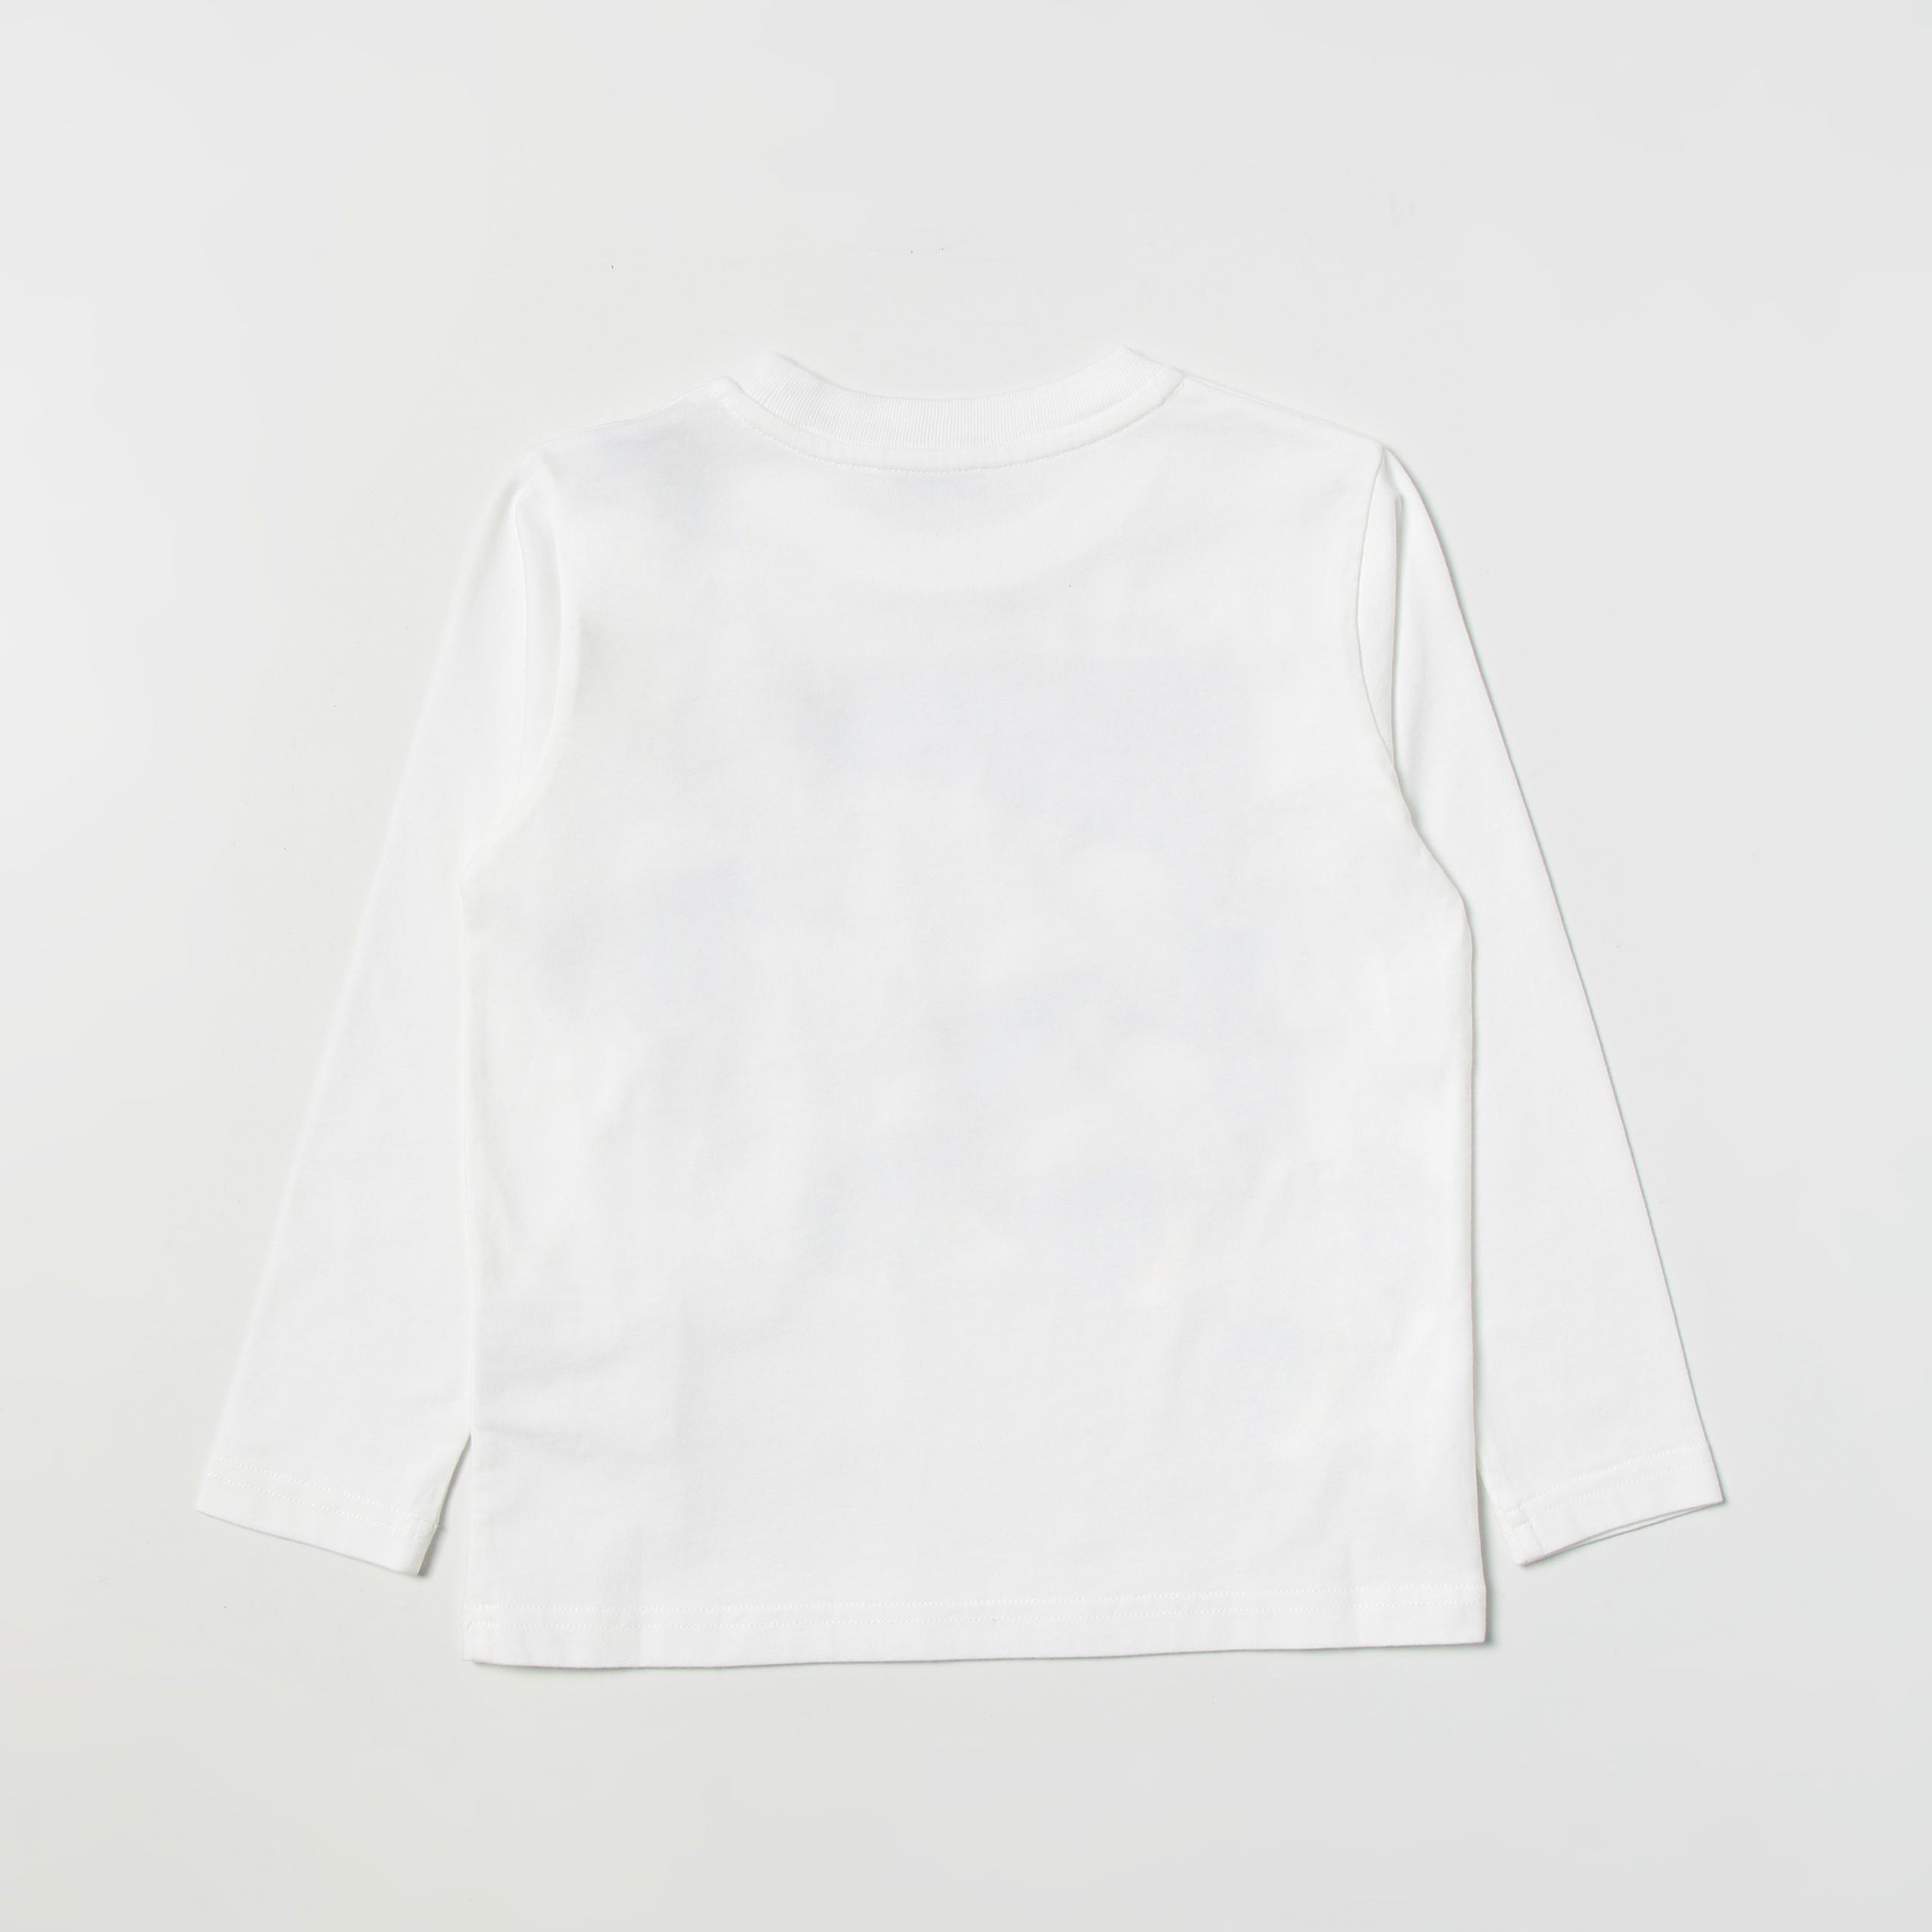 Boys White Printed Cotton T-Shirt